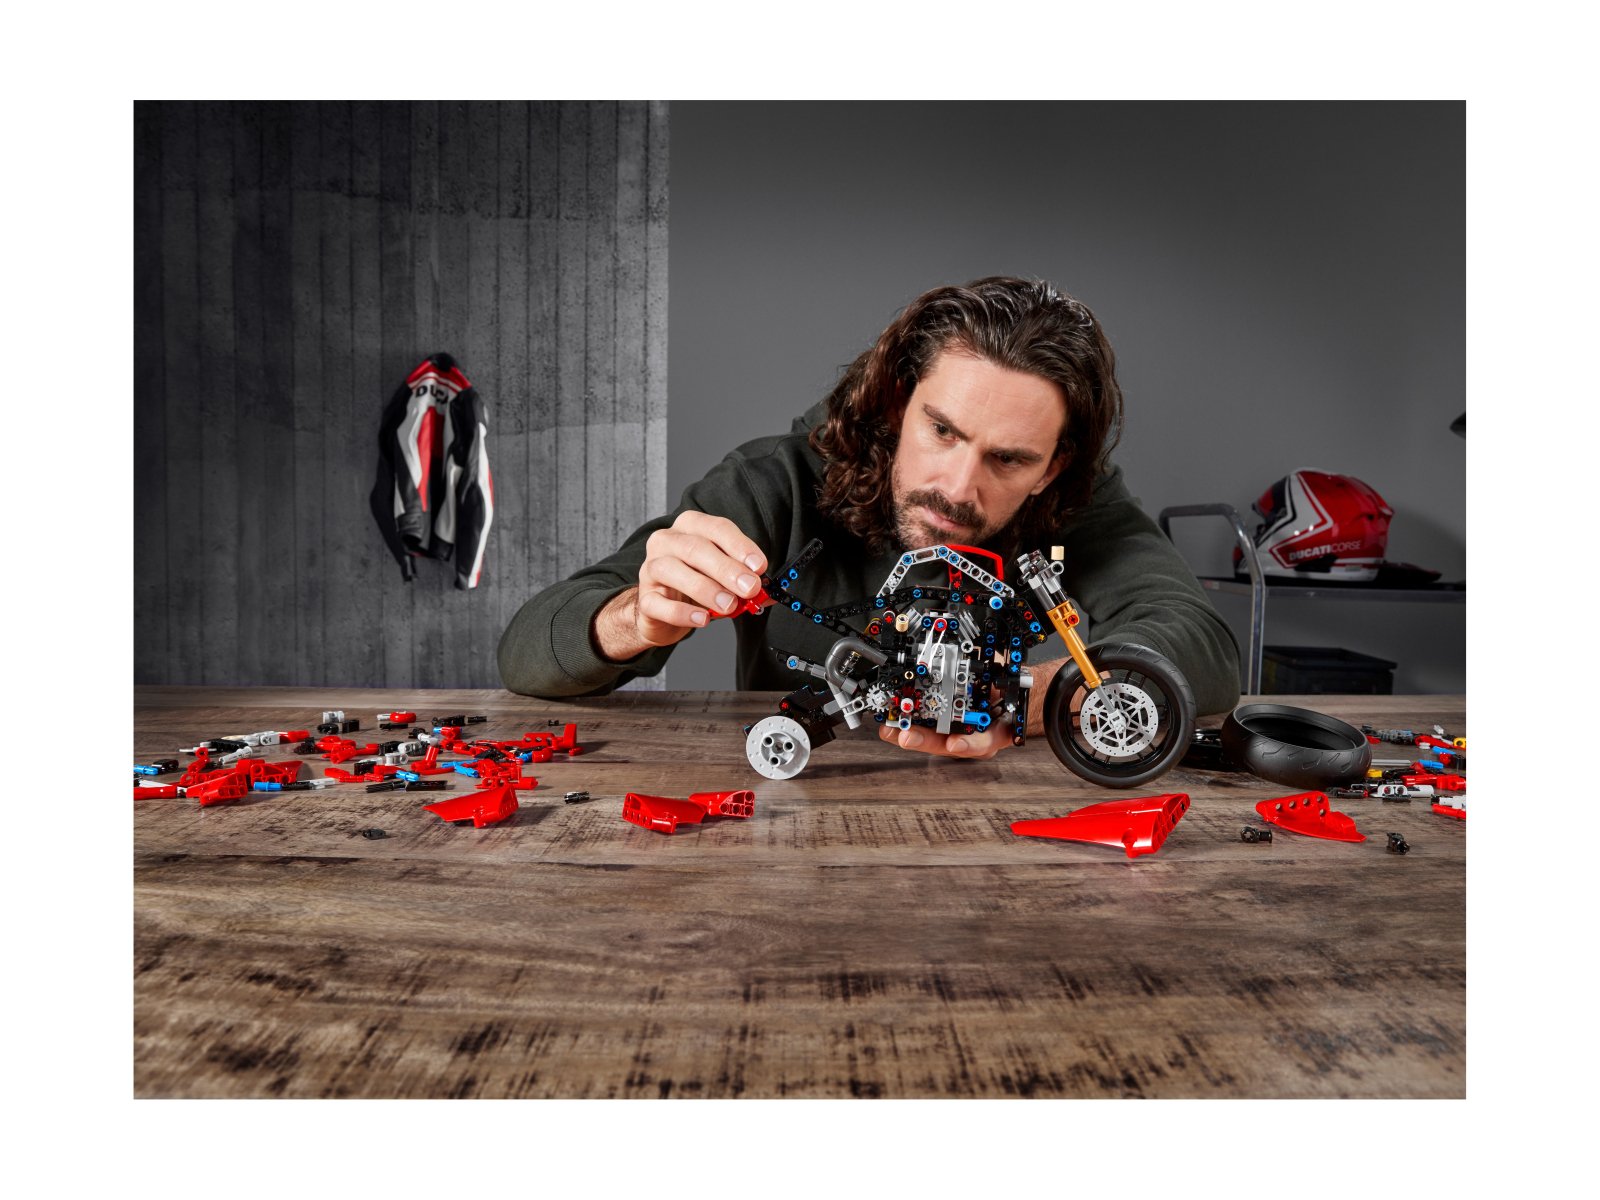 LEGO Technic Ducati Panigale V4 R 42107